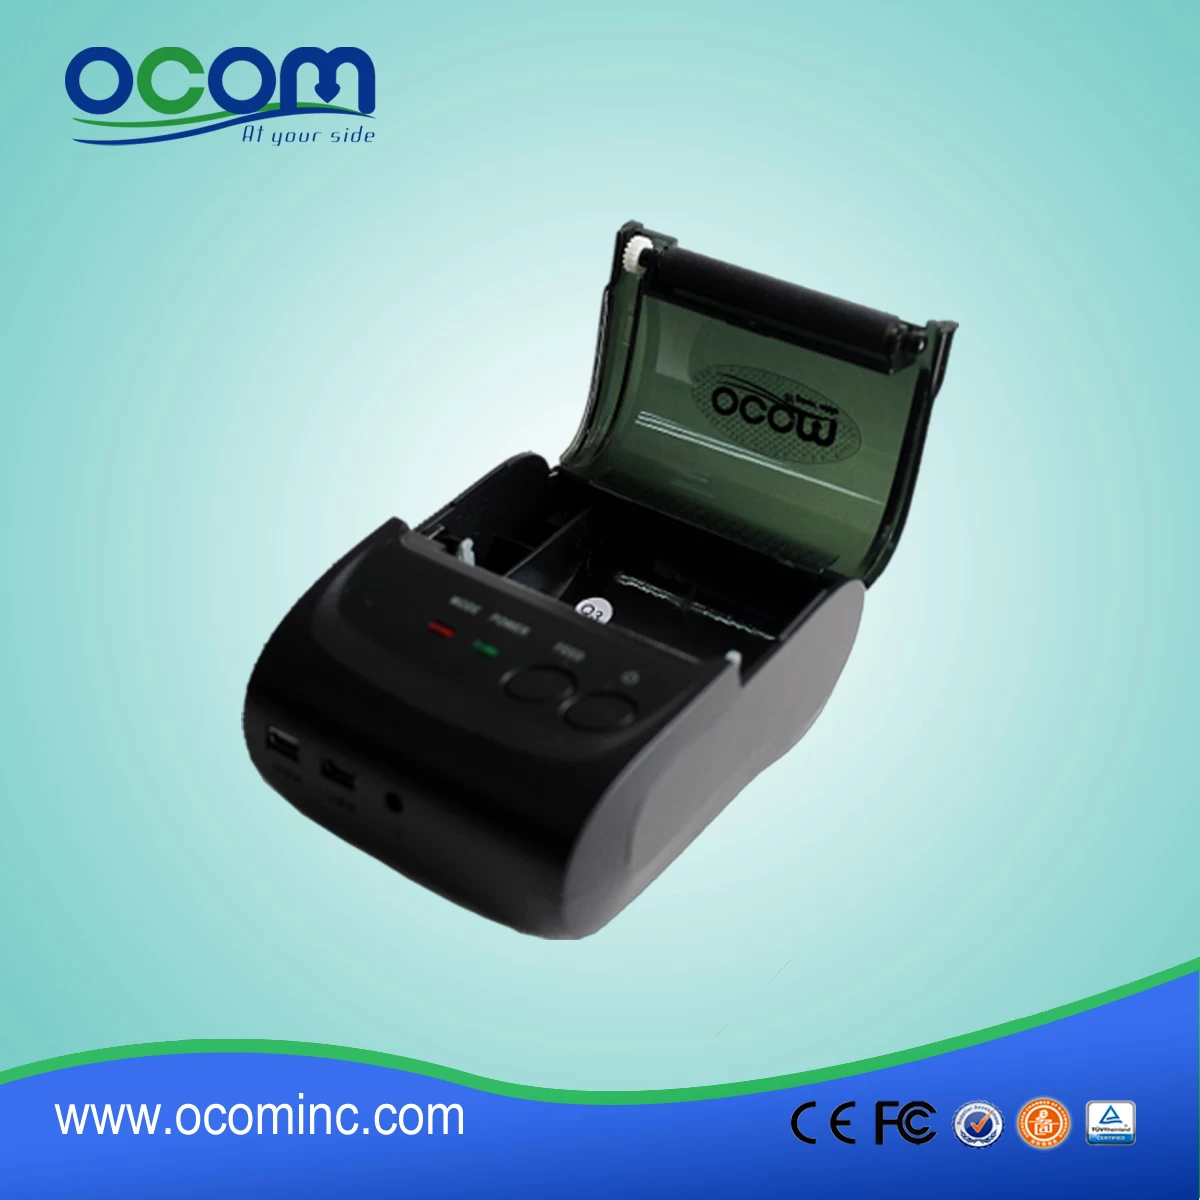 OCPP-M05: android bluetooth thermal printer 58mm, qr code thermal printer